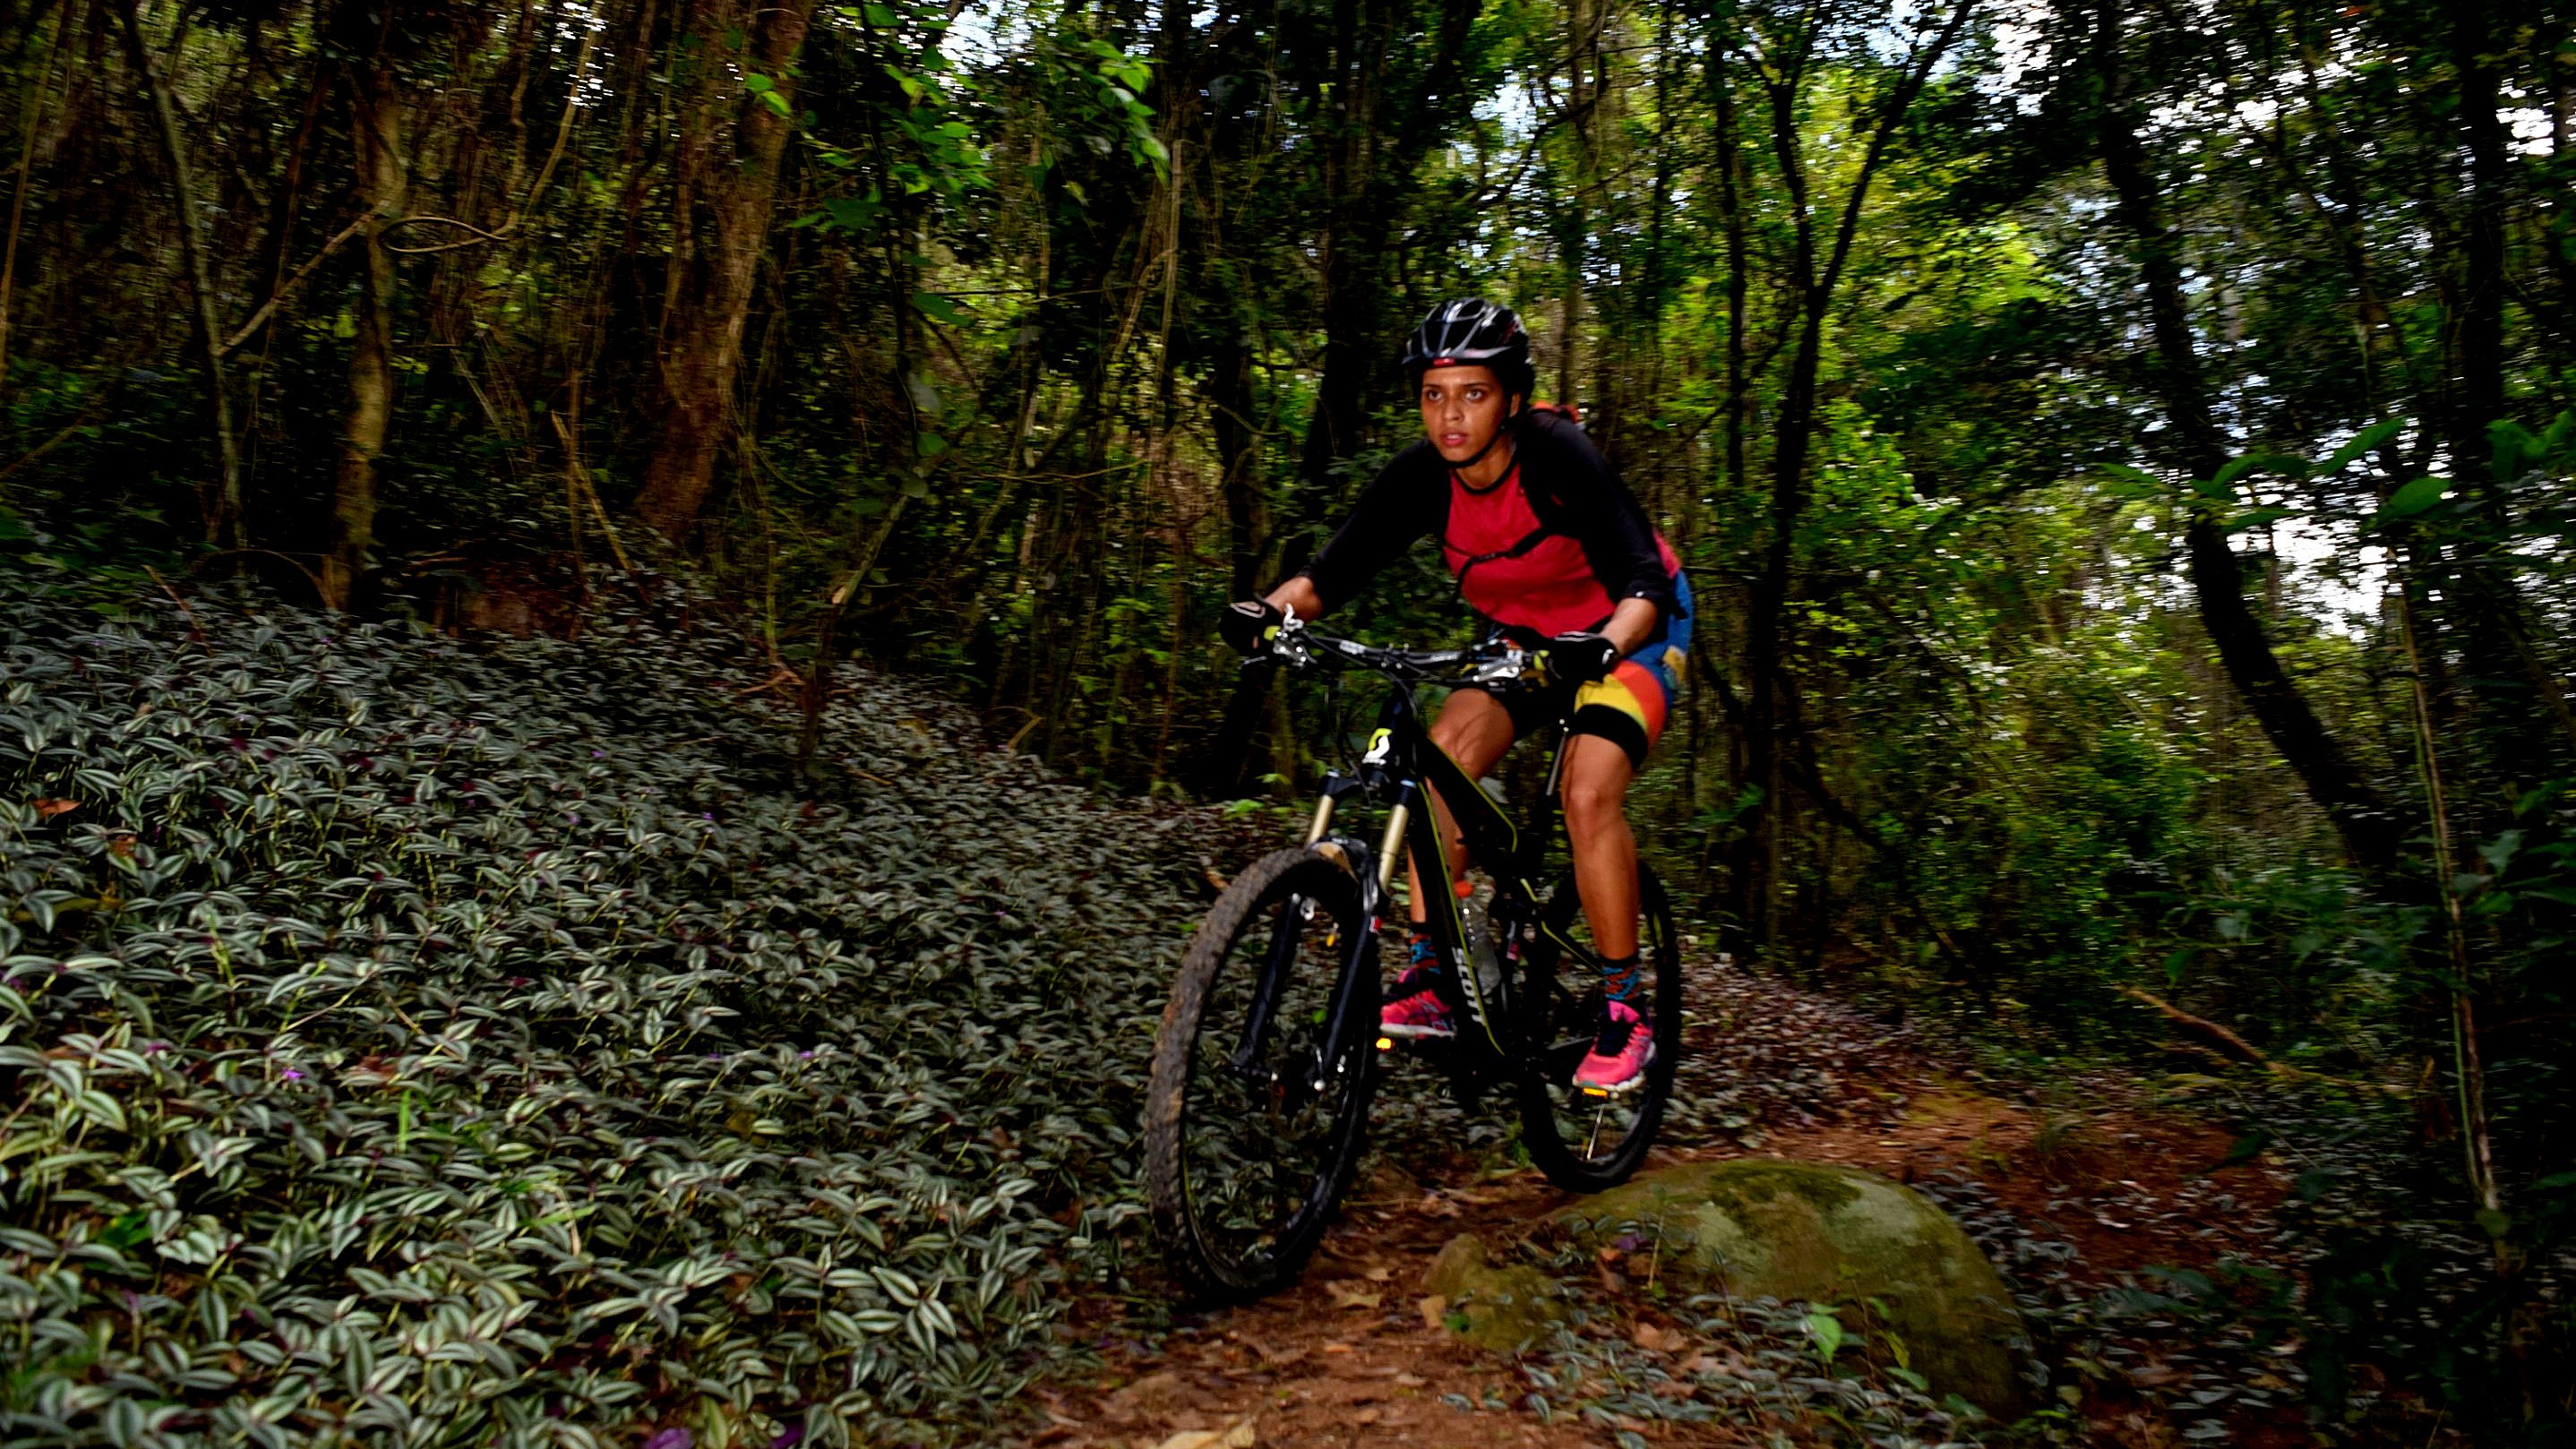  Enduro, de volta às raízes do mountain bike 